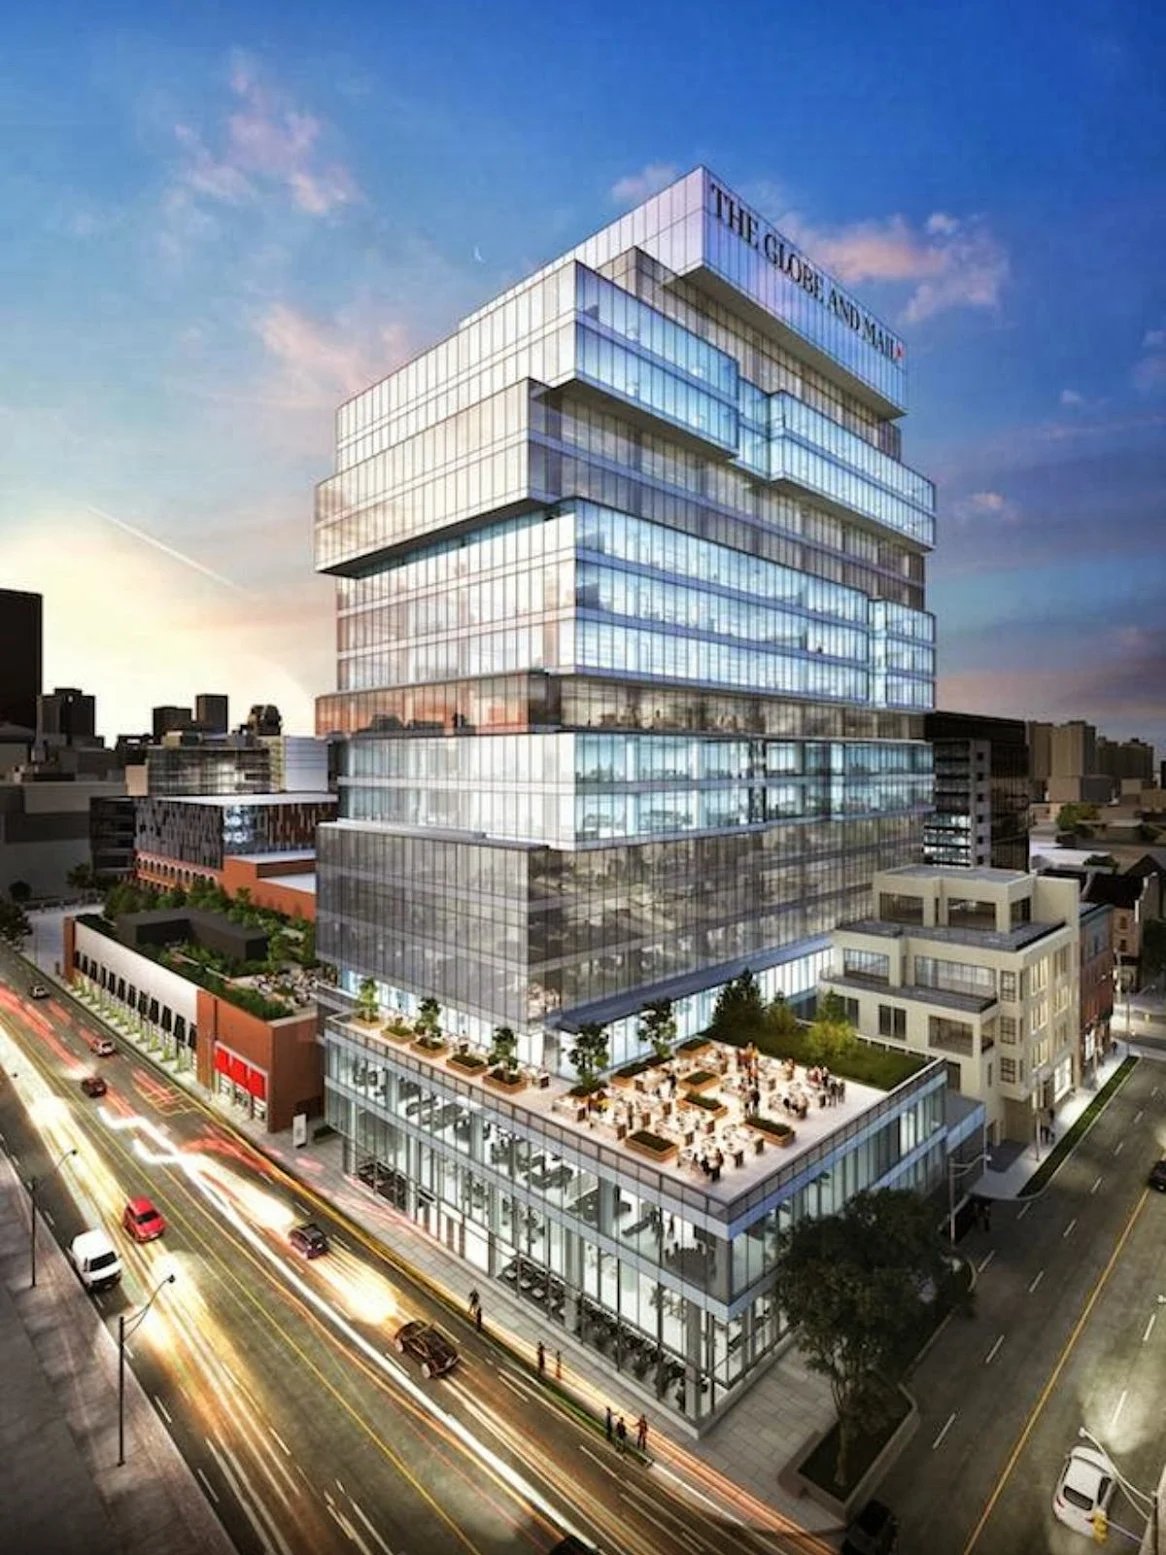 Globe and Mail Centre by Diamond Schmitt Architects